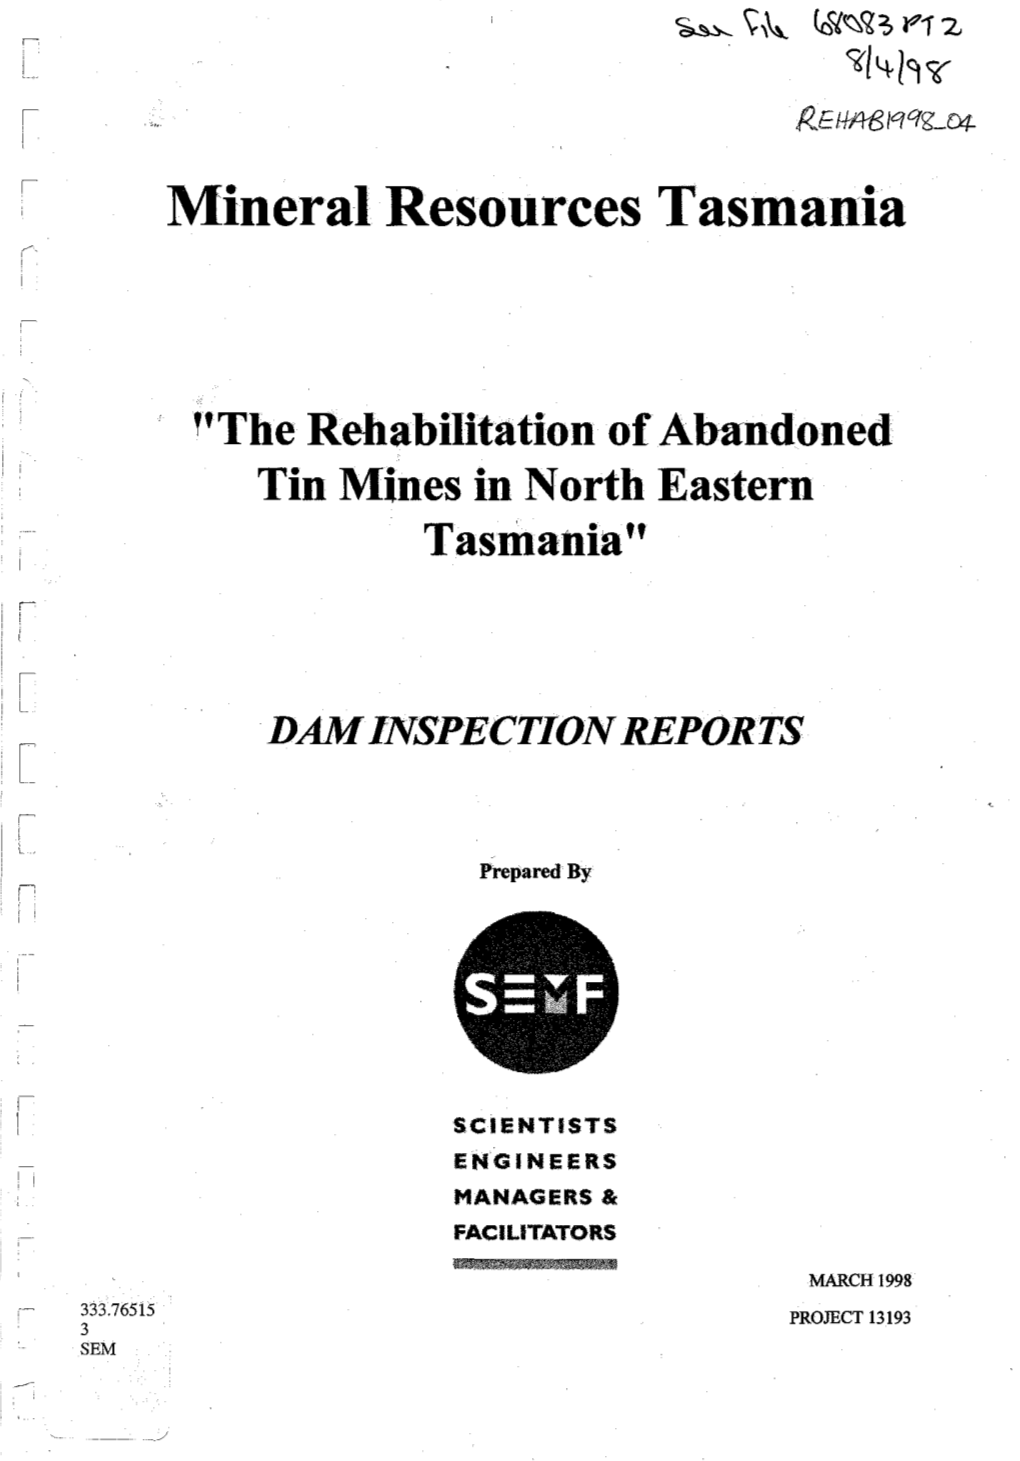 The Rehabilitation of Abandoned Tin Mines in North Eastern Tasmania" R I